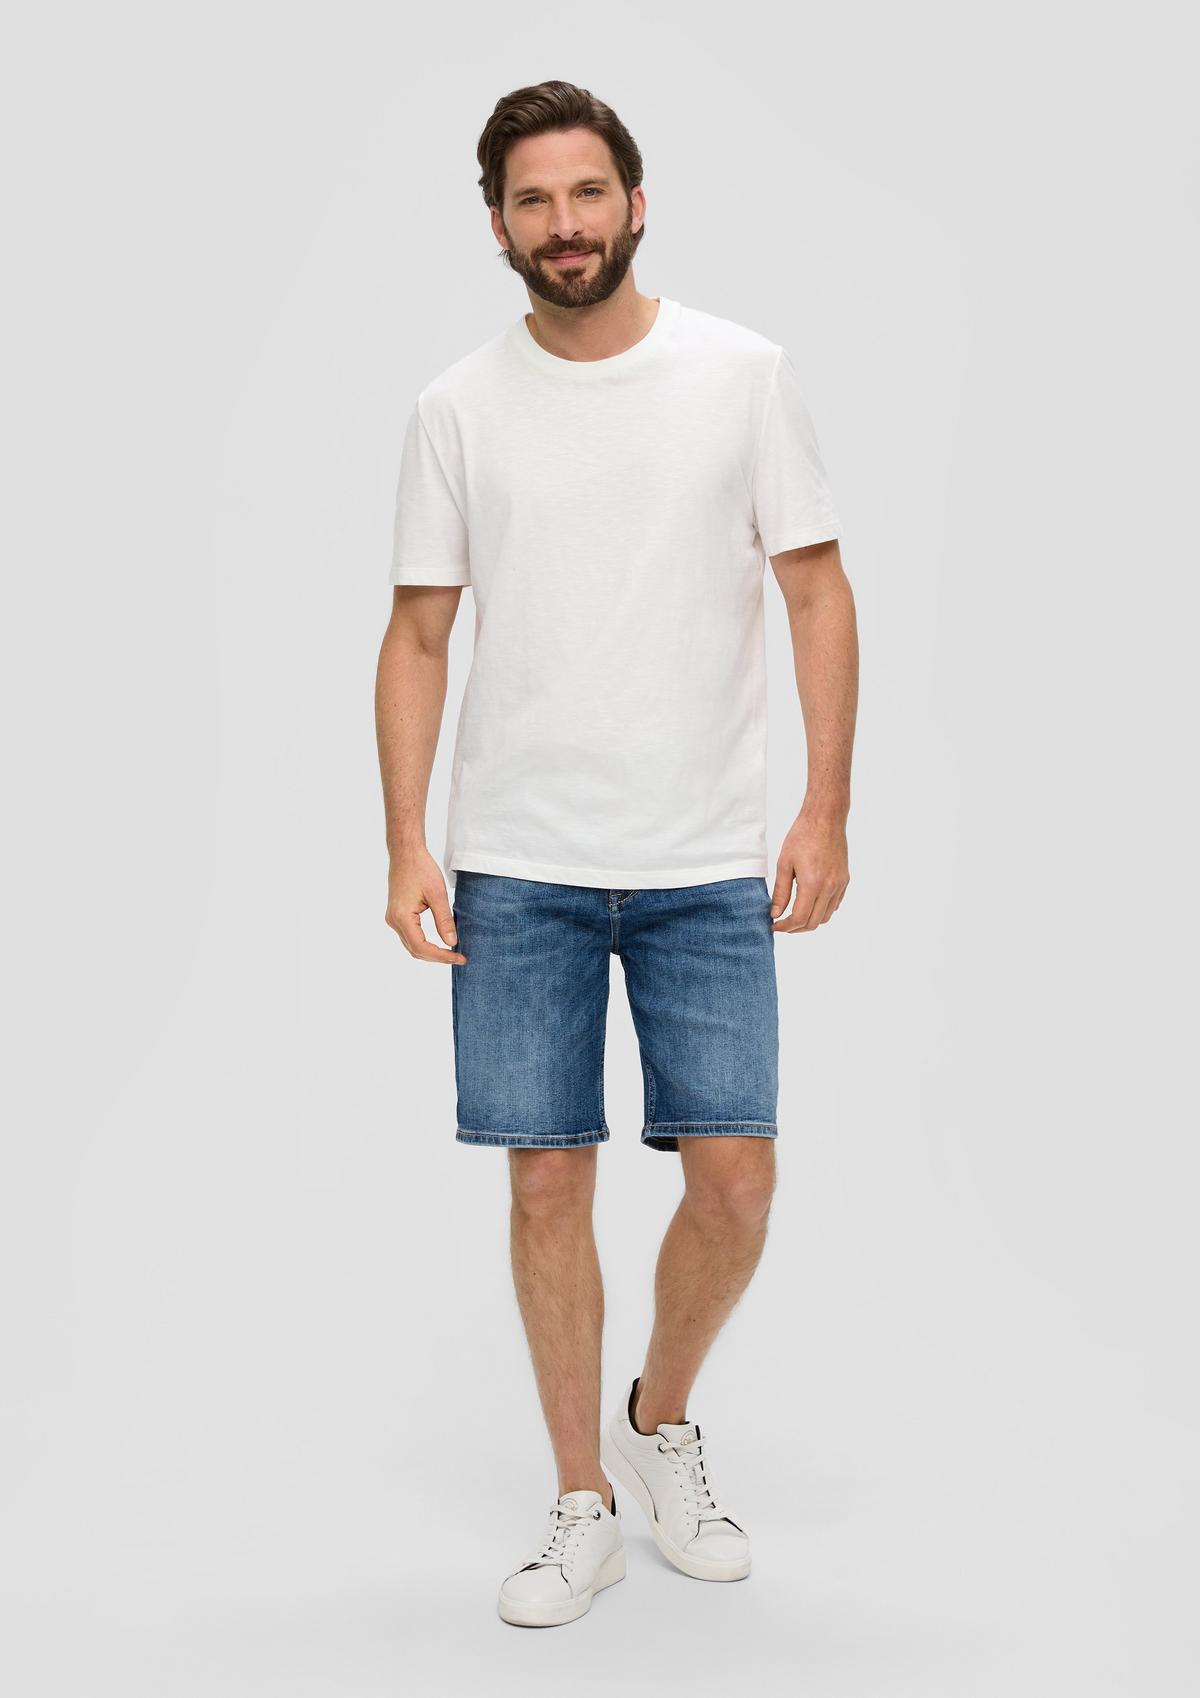 Short Jeans / Regular fit / Mid rise / Straight leg